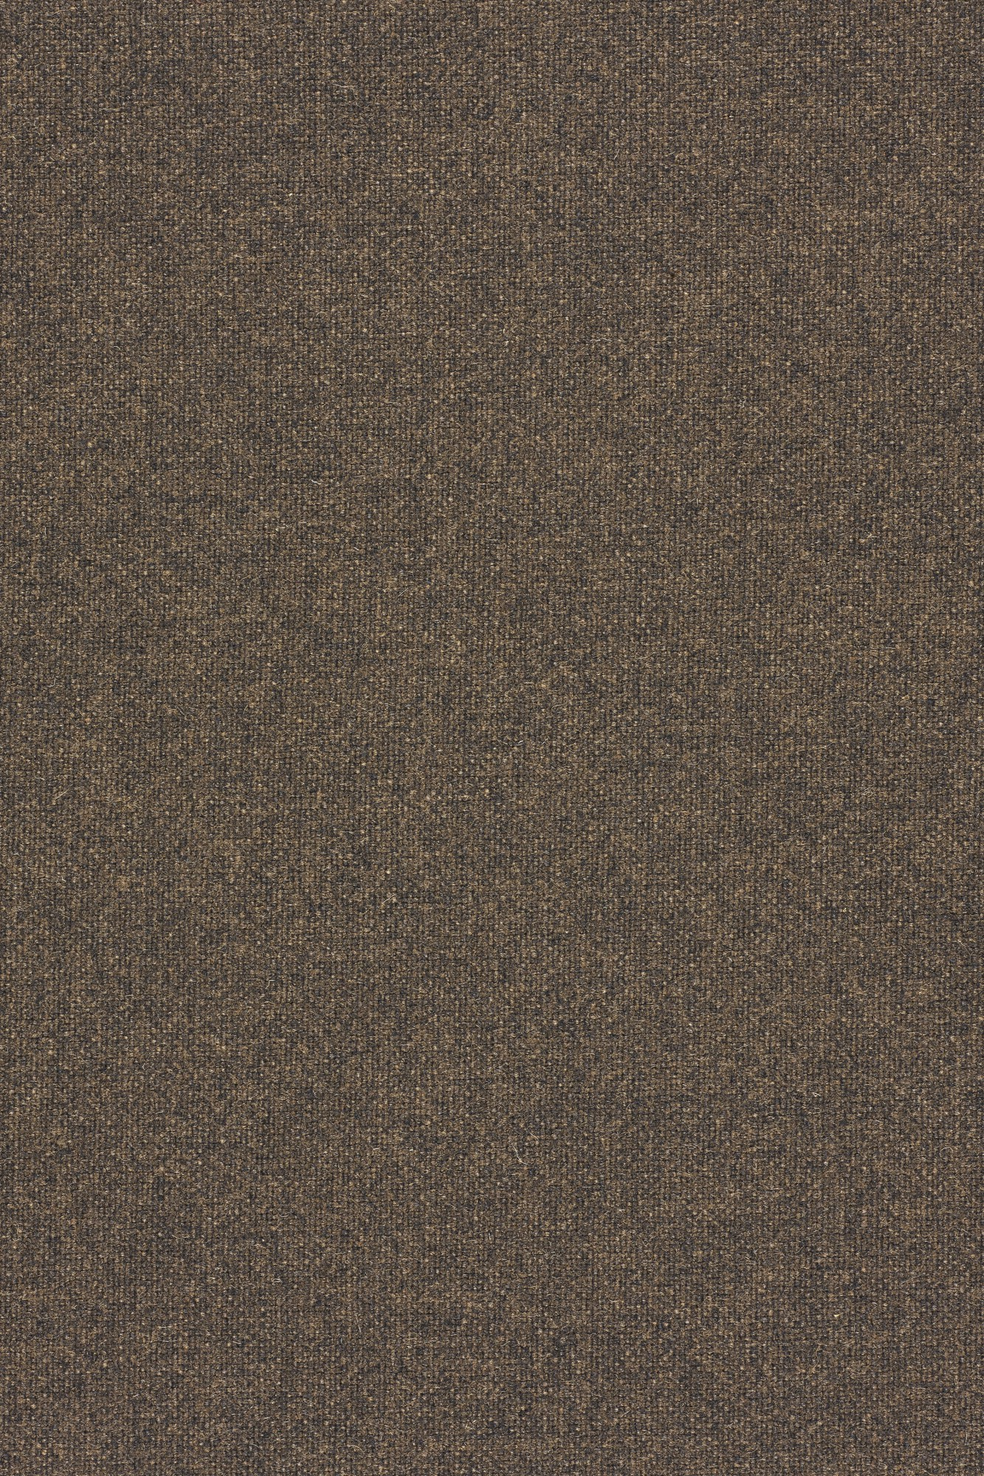 Fabric sample Tonica 2 383 brown